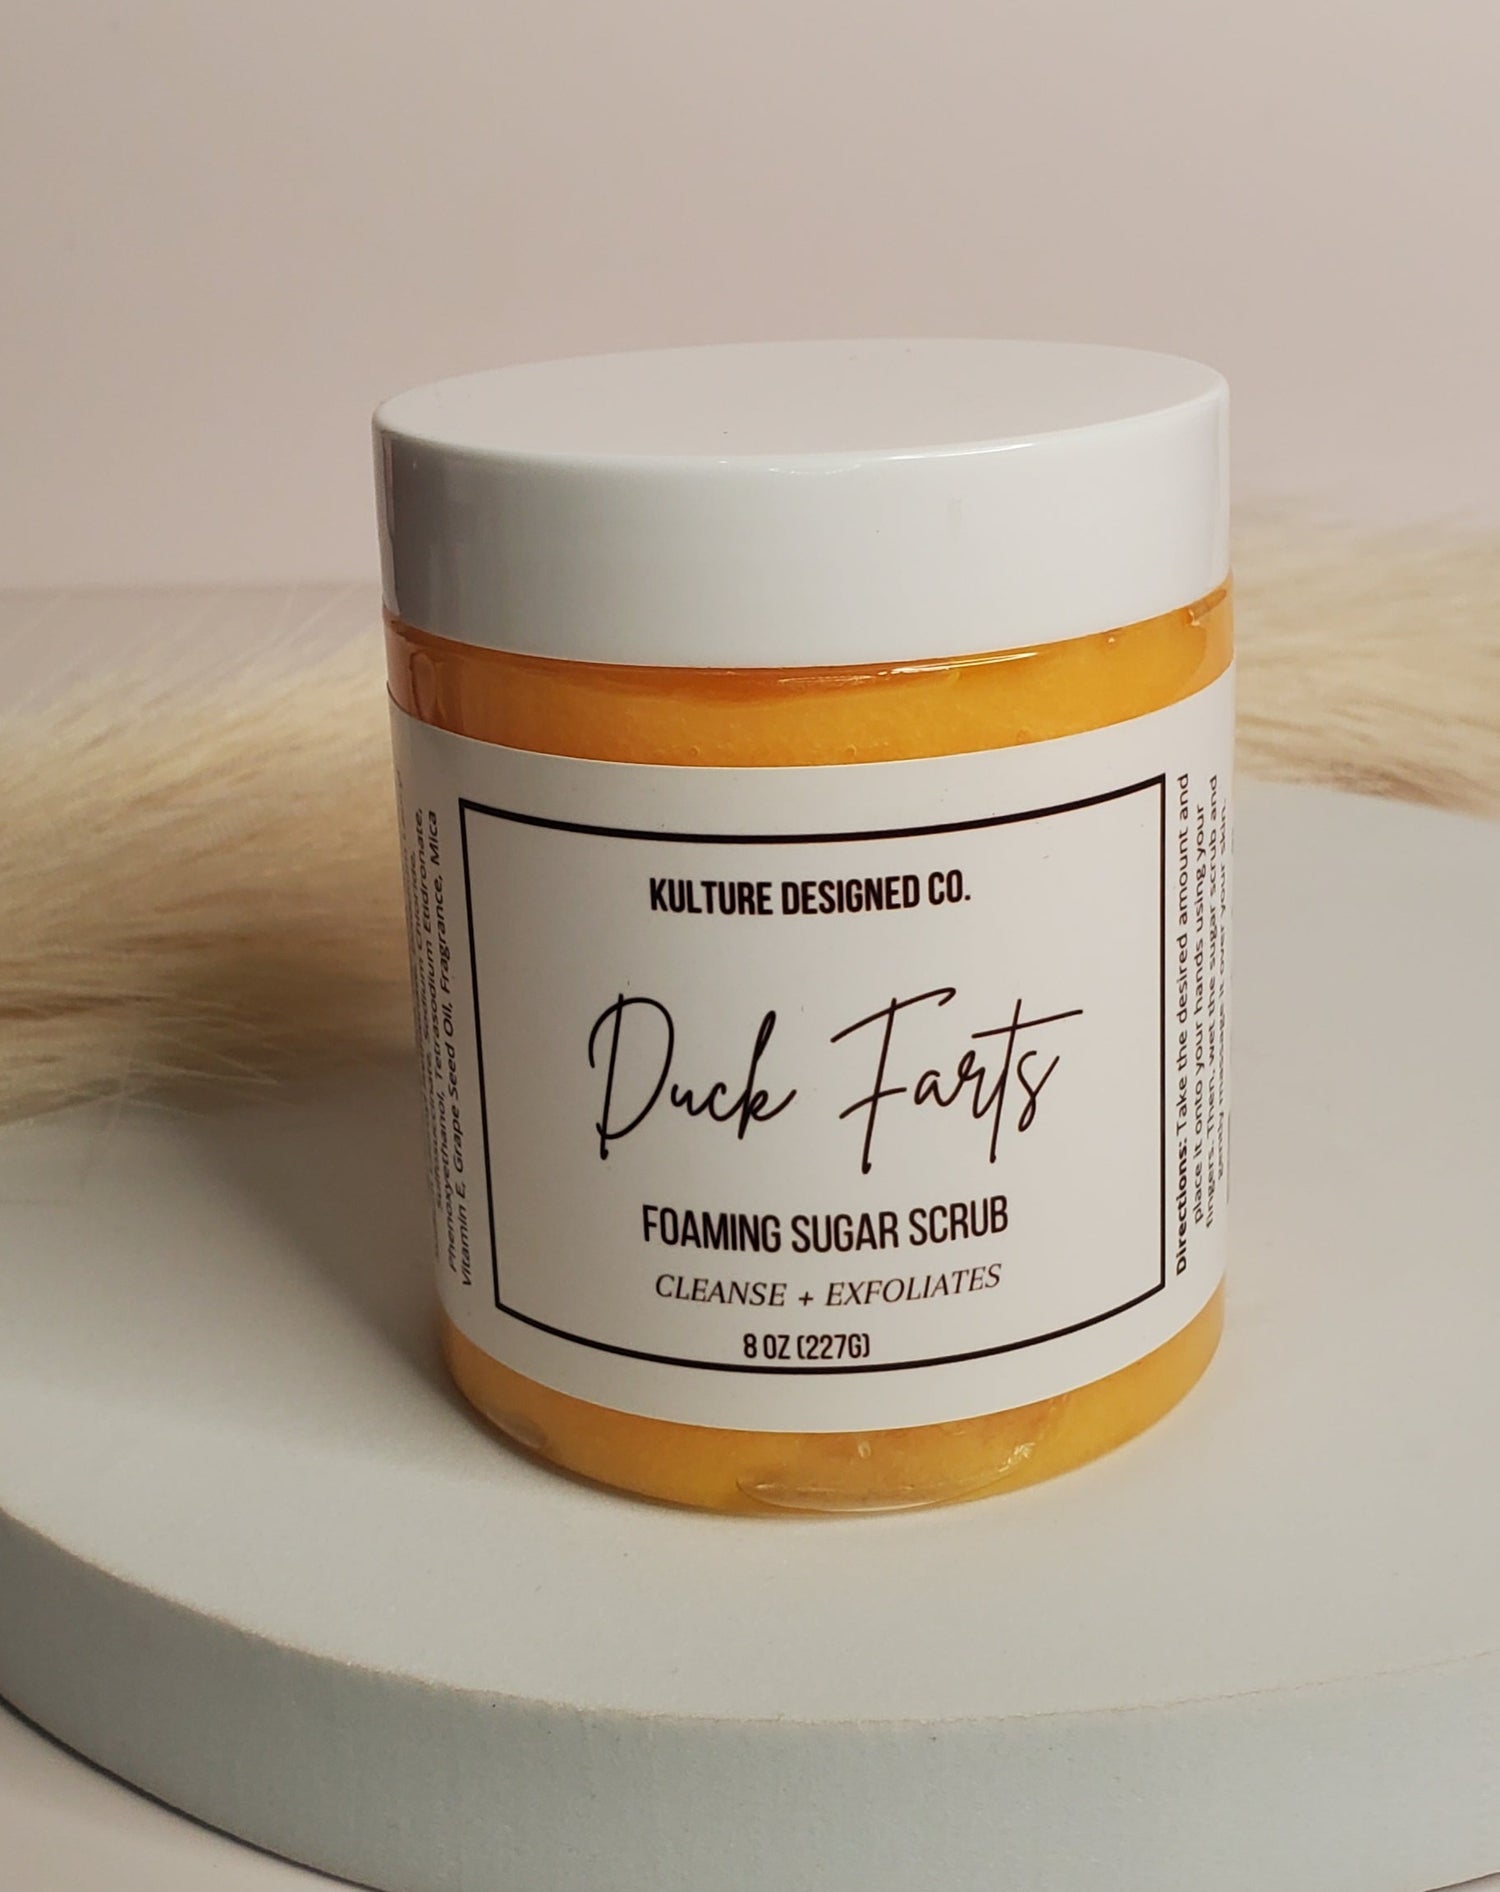 DUCK FARTS | Foaming Sugar Scrub - Kulture Designed Co.